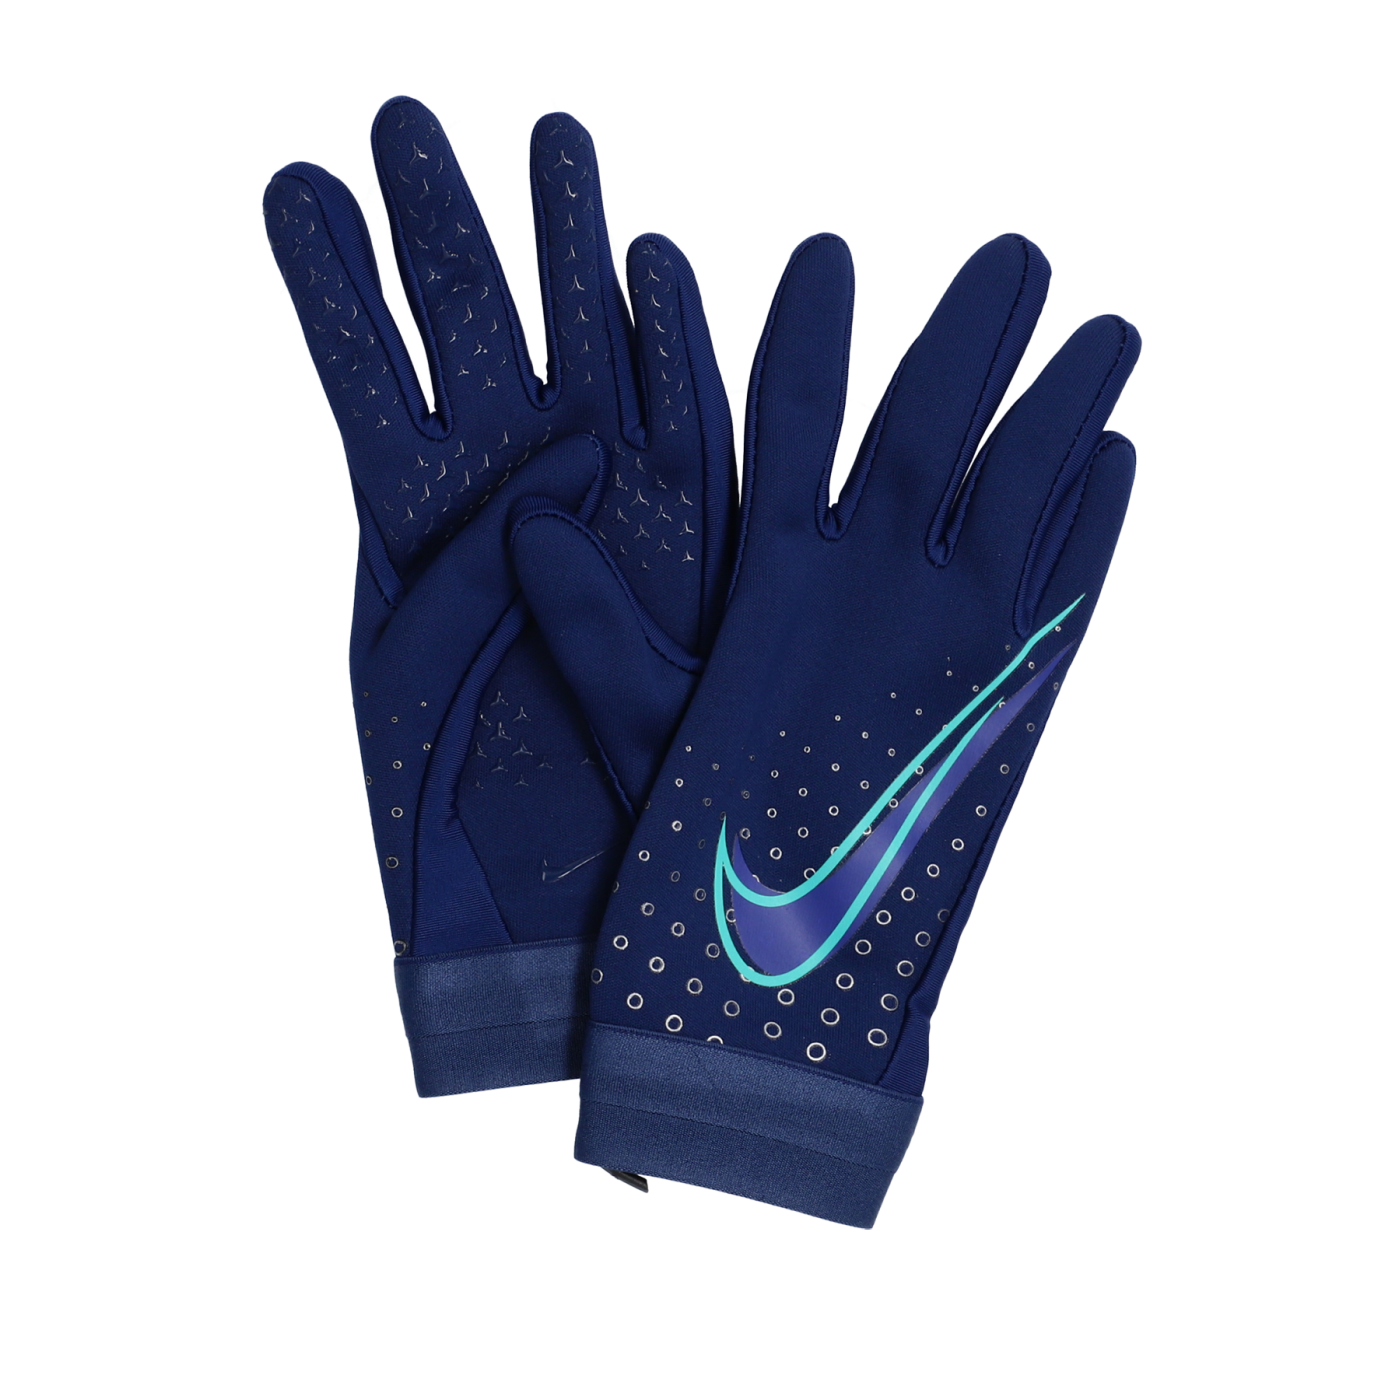 cr7 hyperwarm gloves